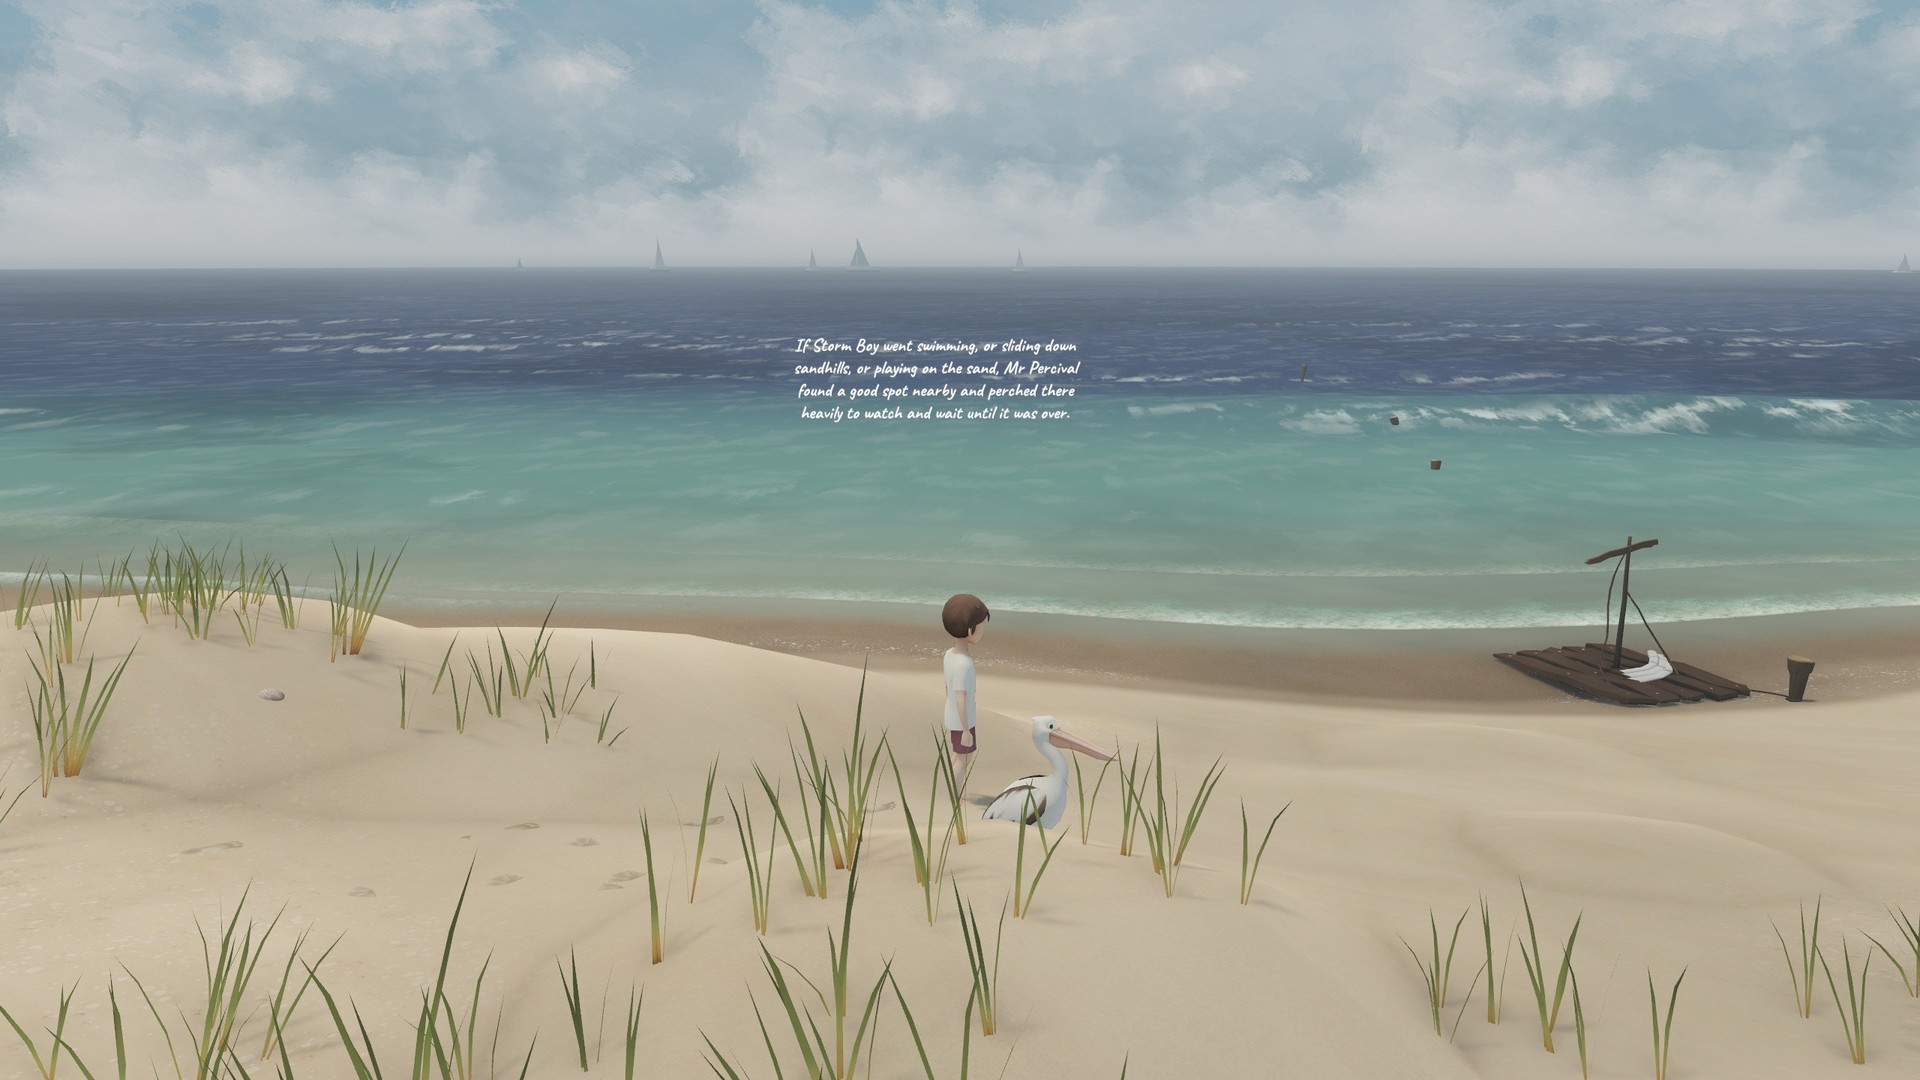 Storm Boy: The Game - screenshot 16